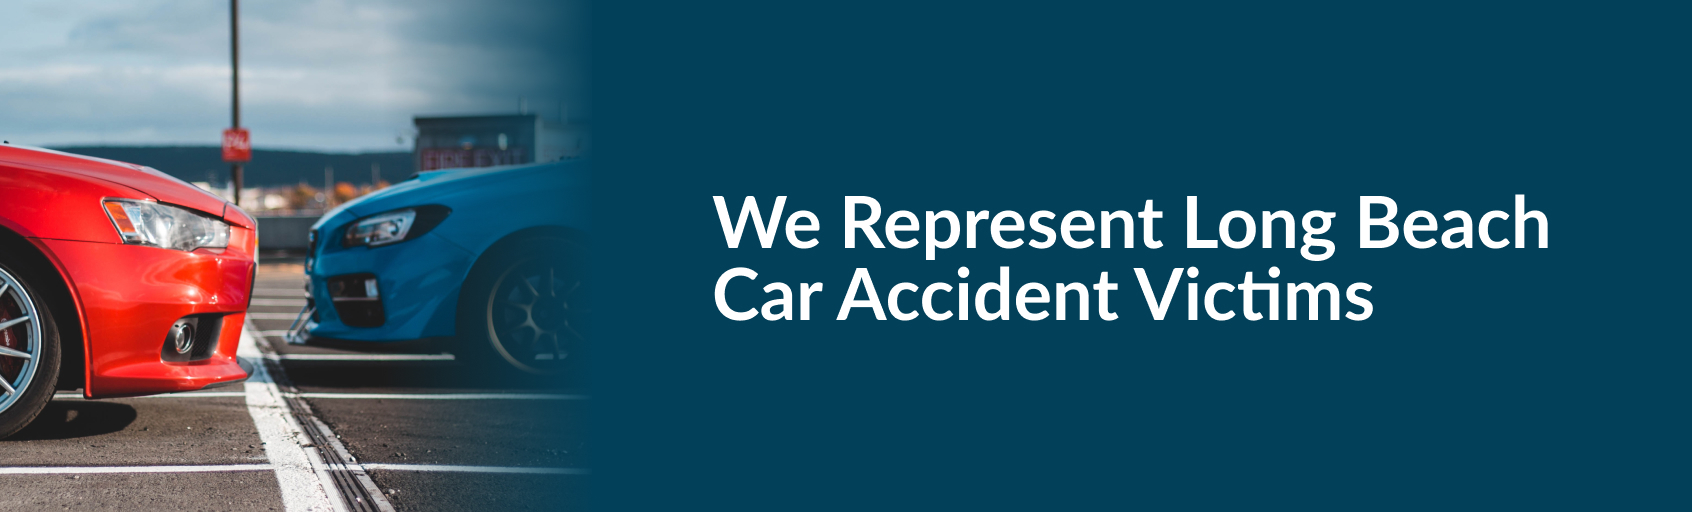 We Represent Long Beach Car Accident Victims